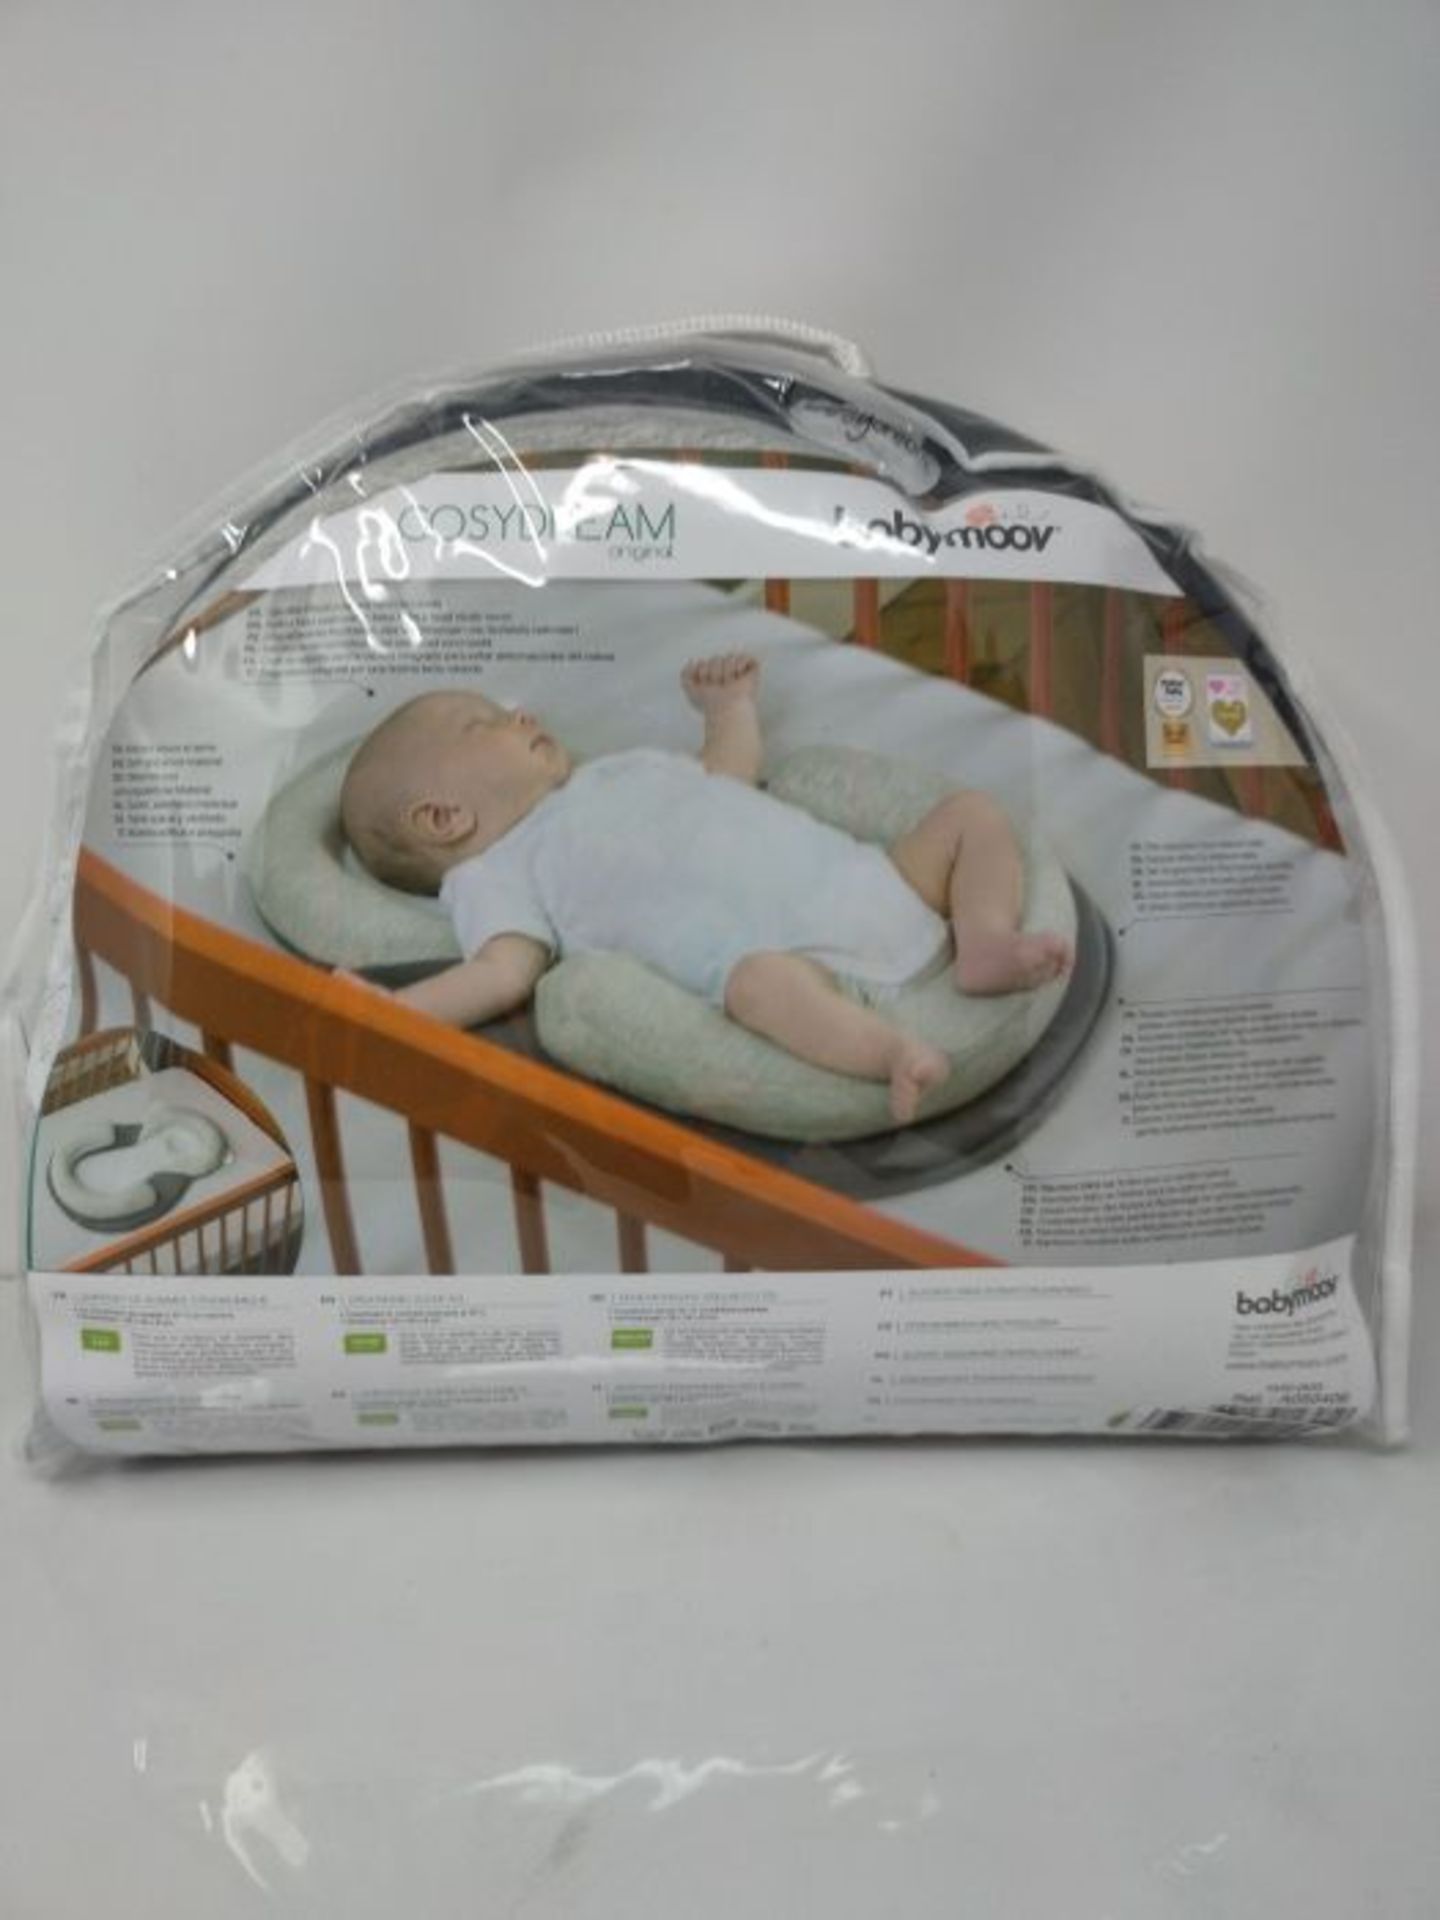 Babymoov Cosydream Original Ergonomic Support Newborn Reducer, 0-3 Months, Smokey - Image 2 of 3